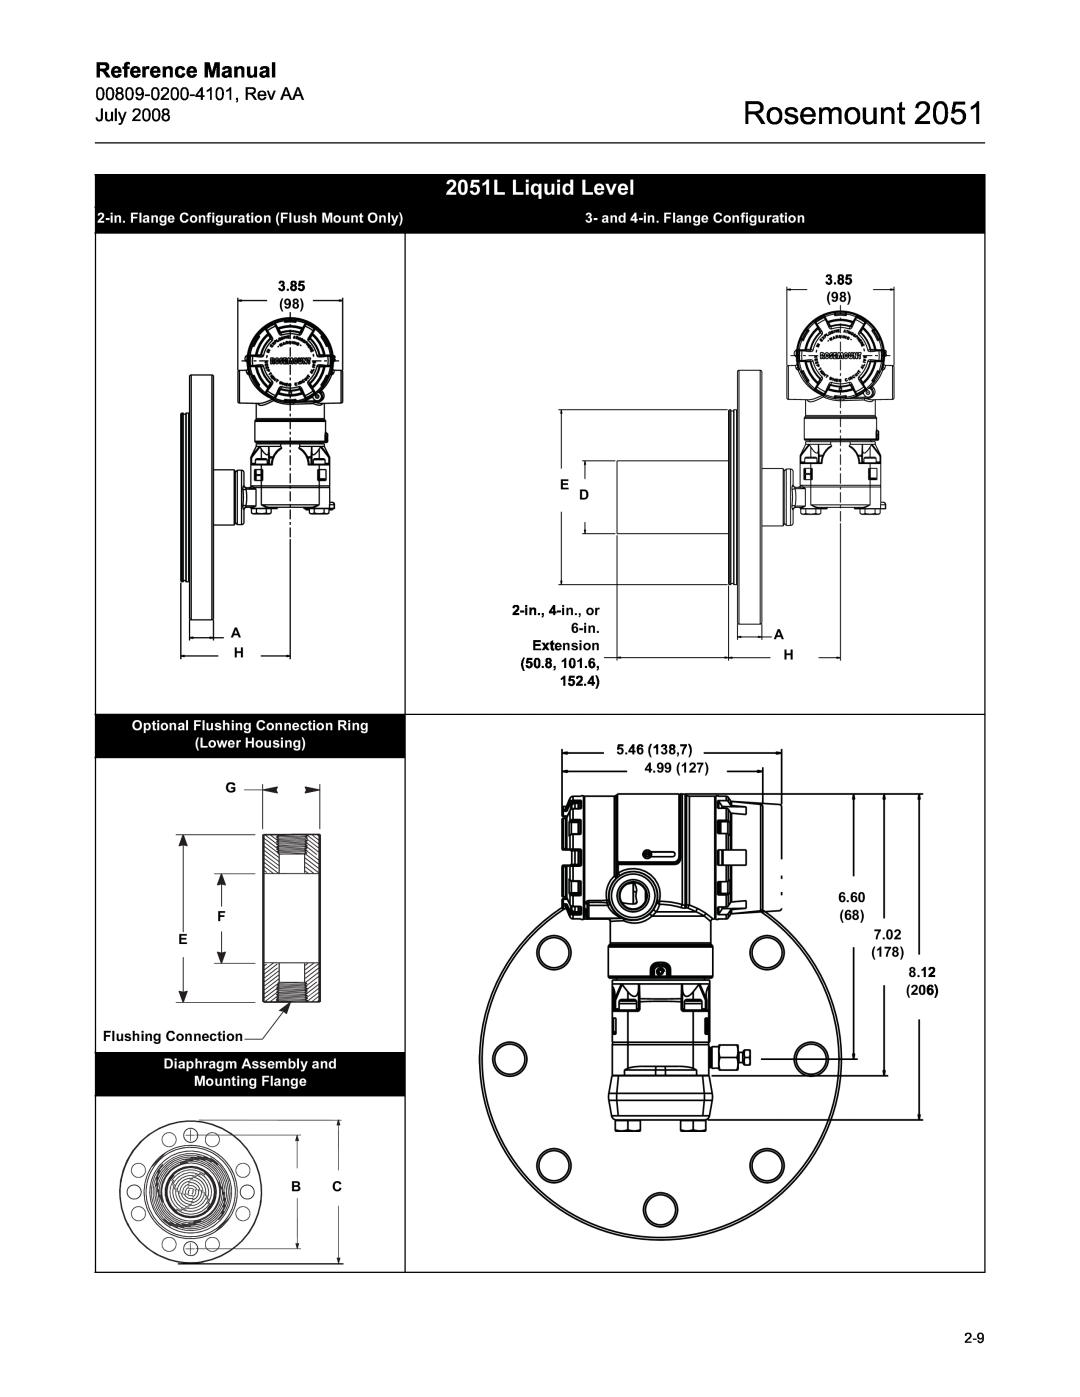 Emerson Process Management manual 2051L Liquid Level, Rosemount, Reference Manual 